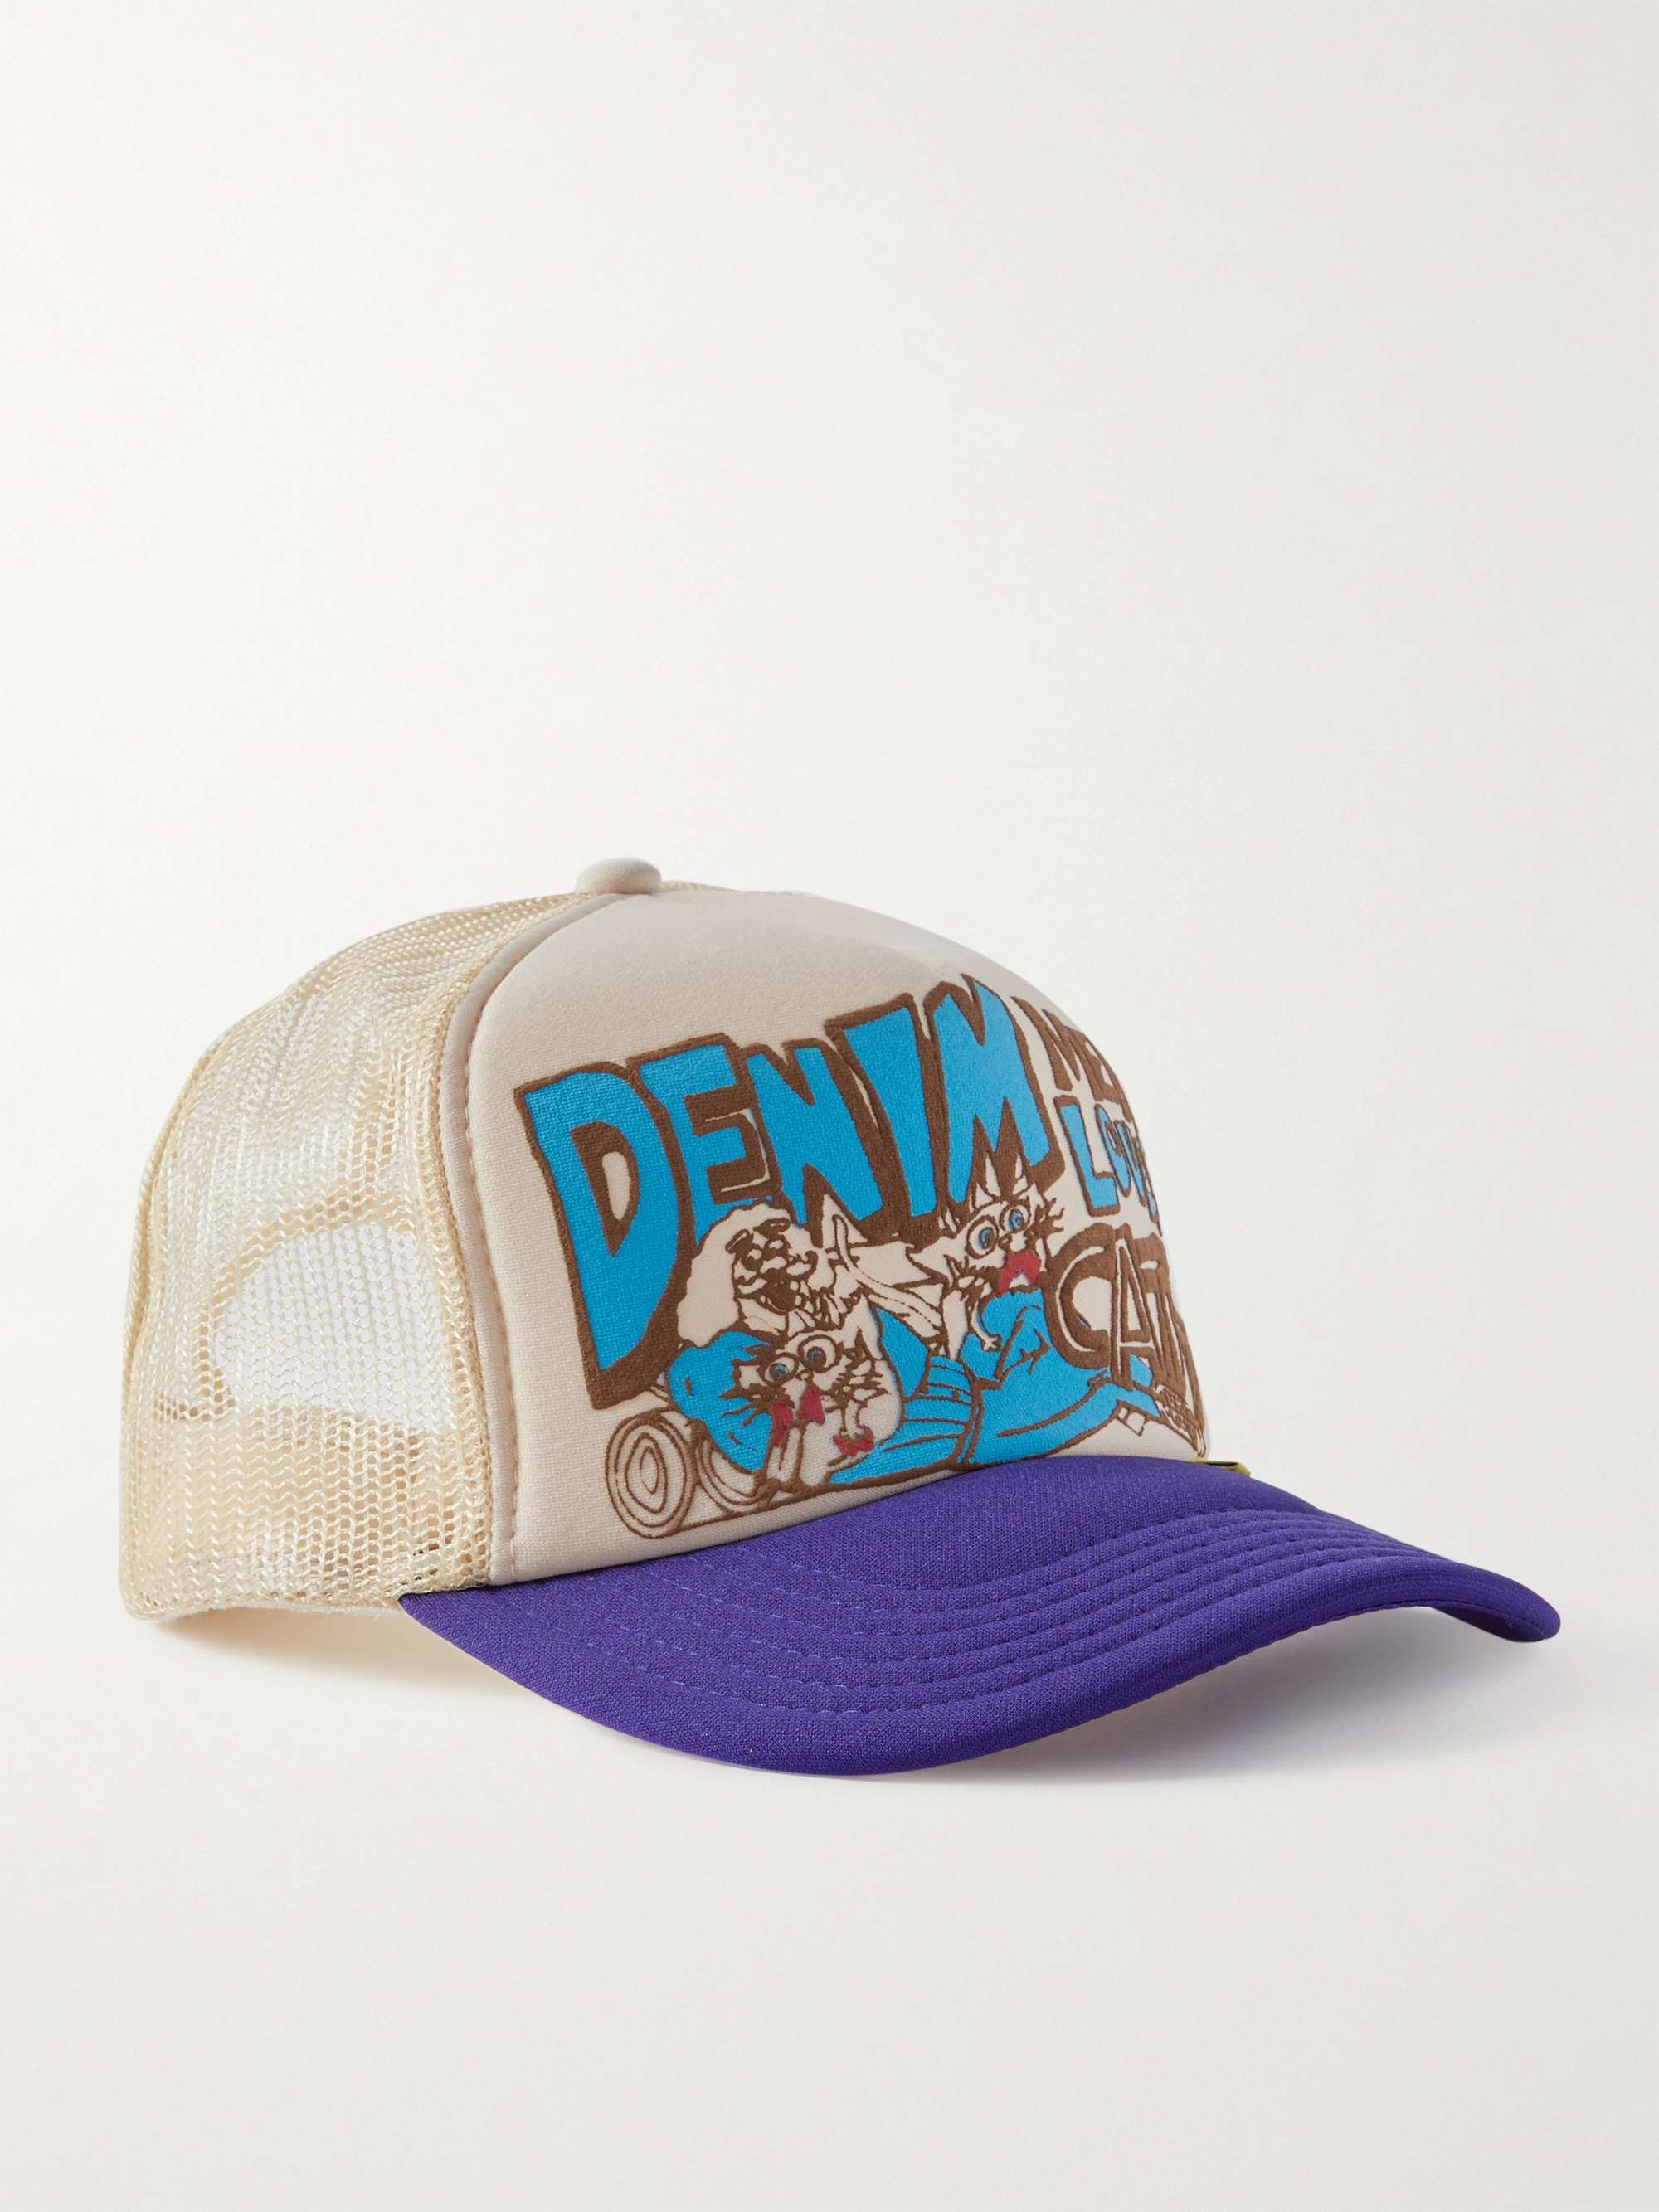 mesh baseball cap trucker hat 